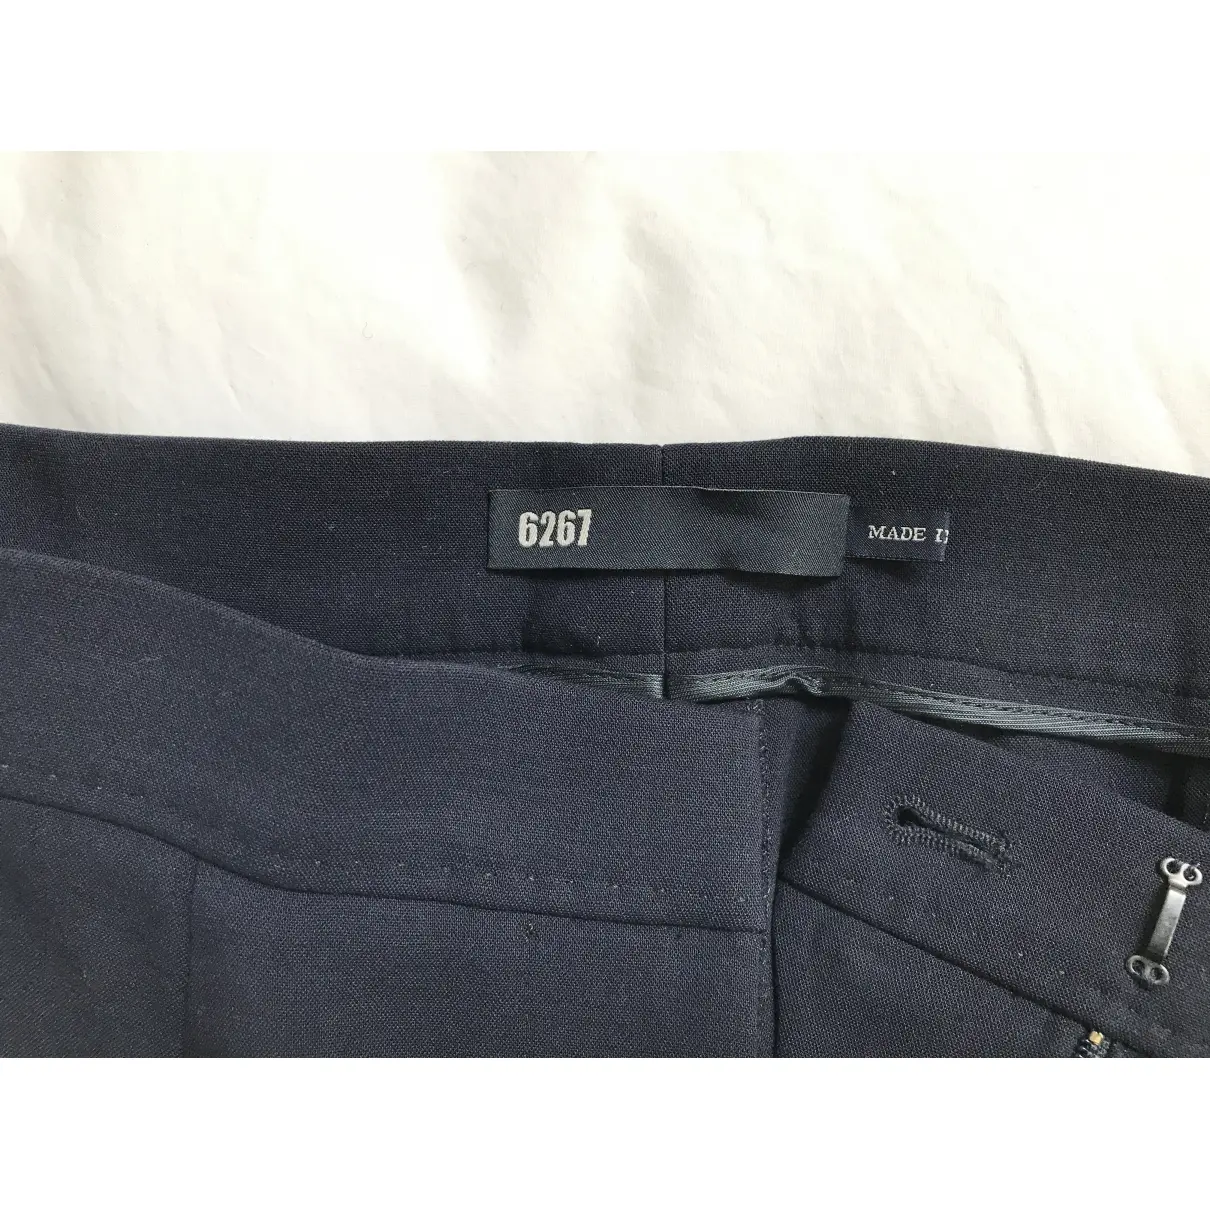 Buy 6267 Trousers online